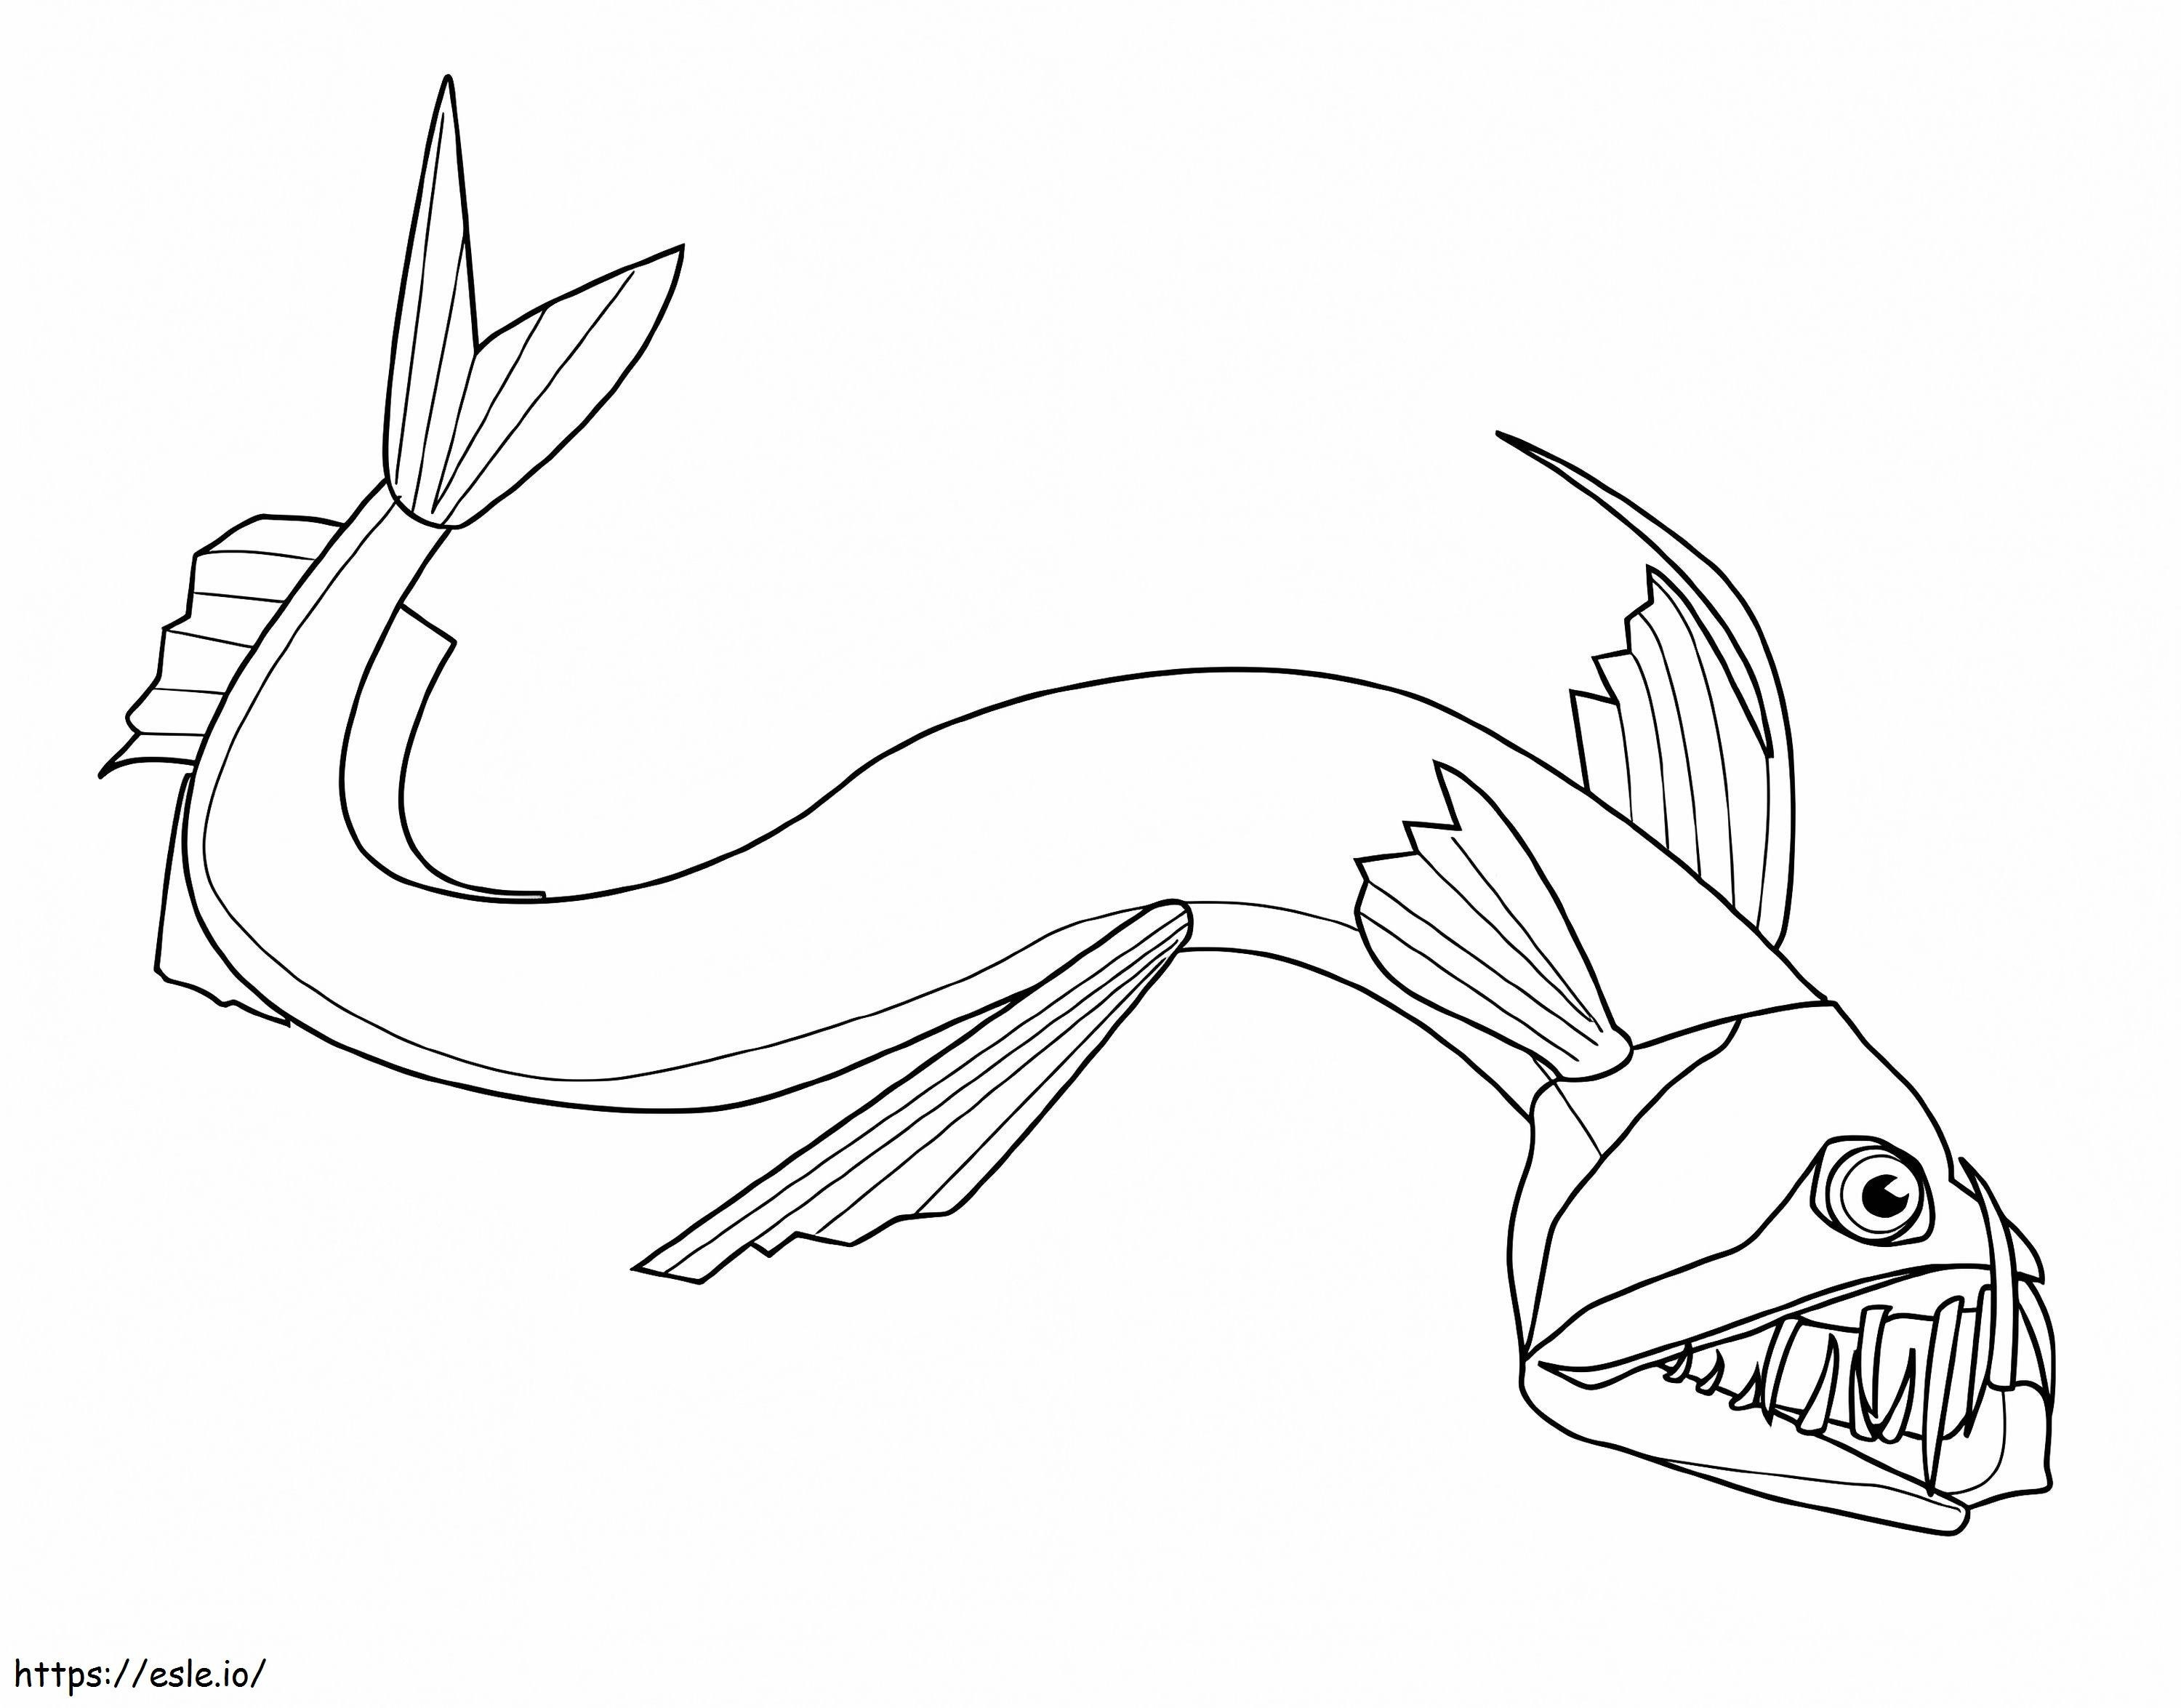 Normal Viperfish coloring page